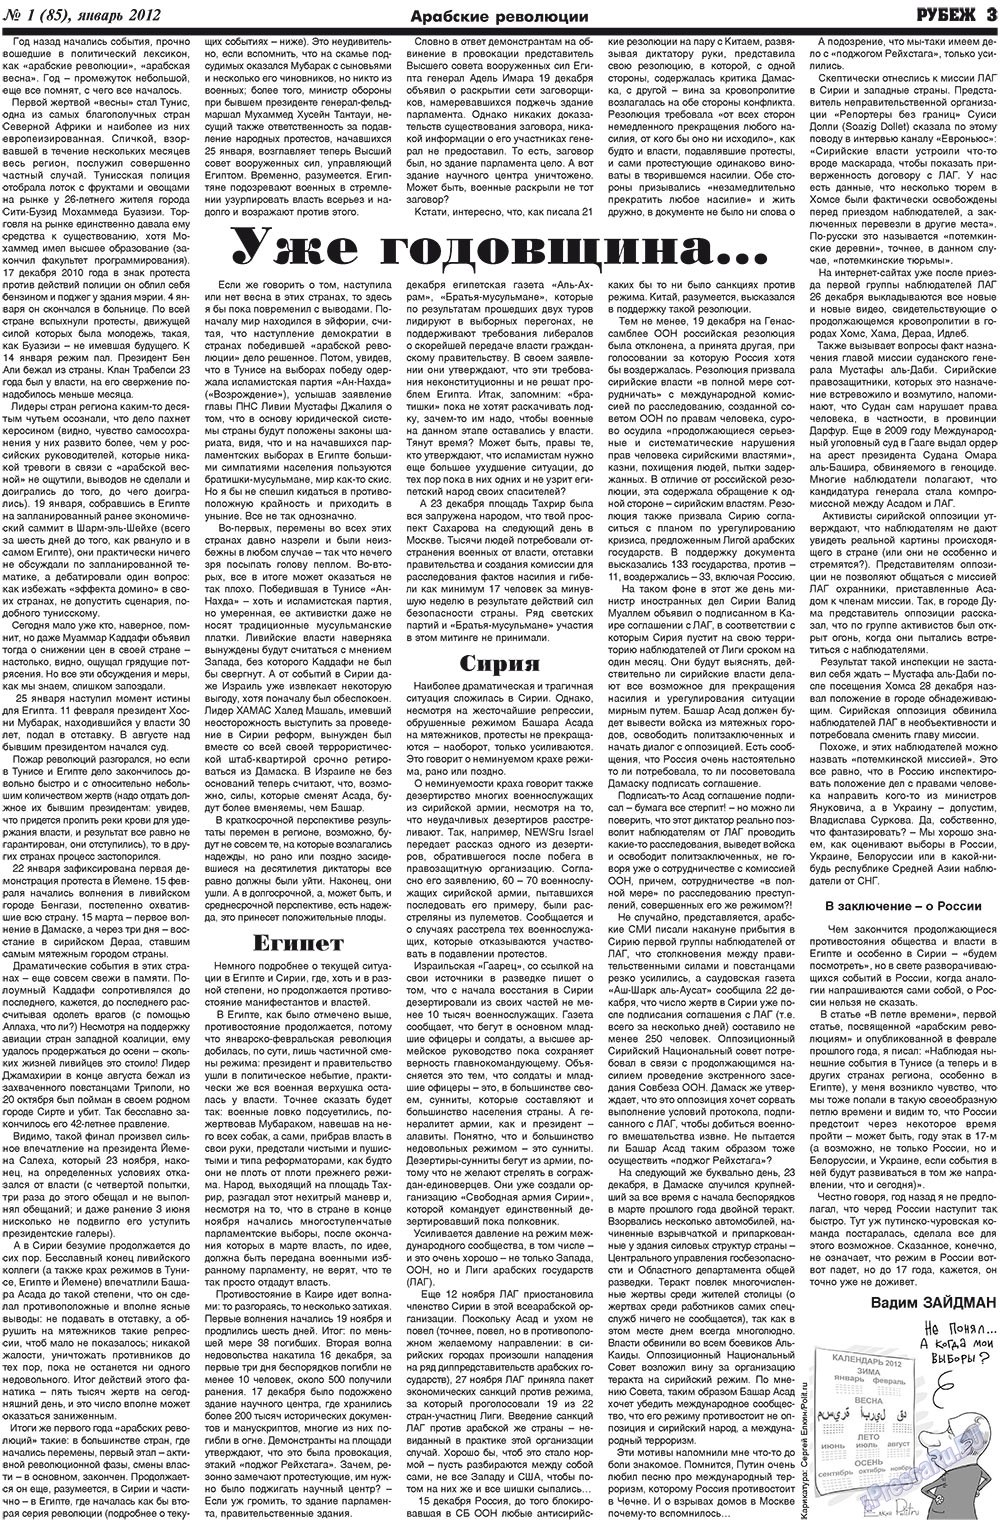 Рубеж, газета. 2012 №1 стр.3